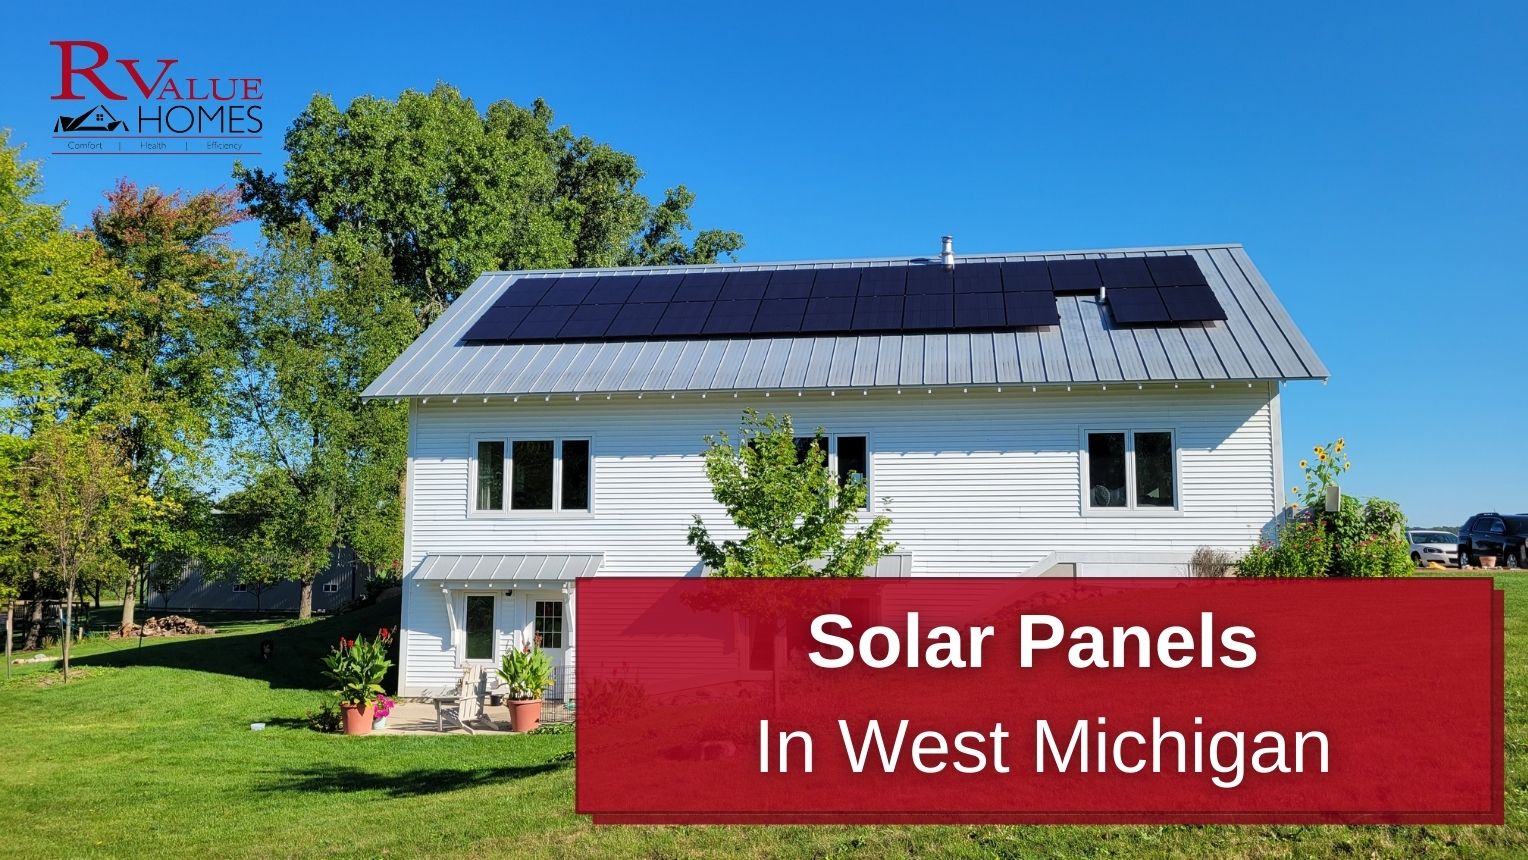 Do Solar Panels Work in West Michigan?